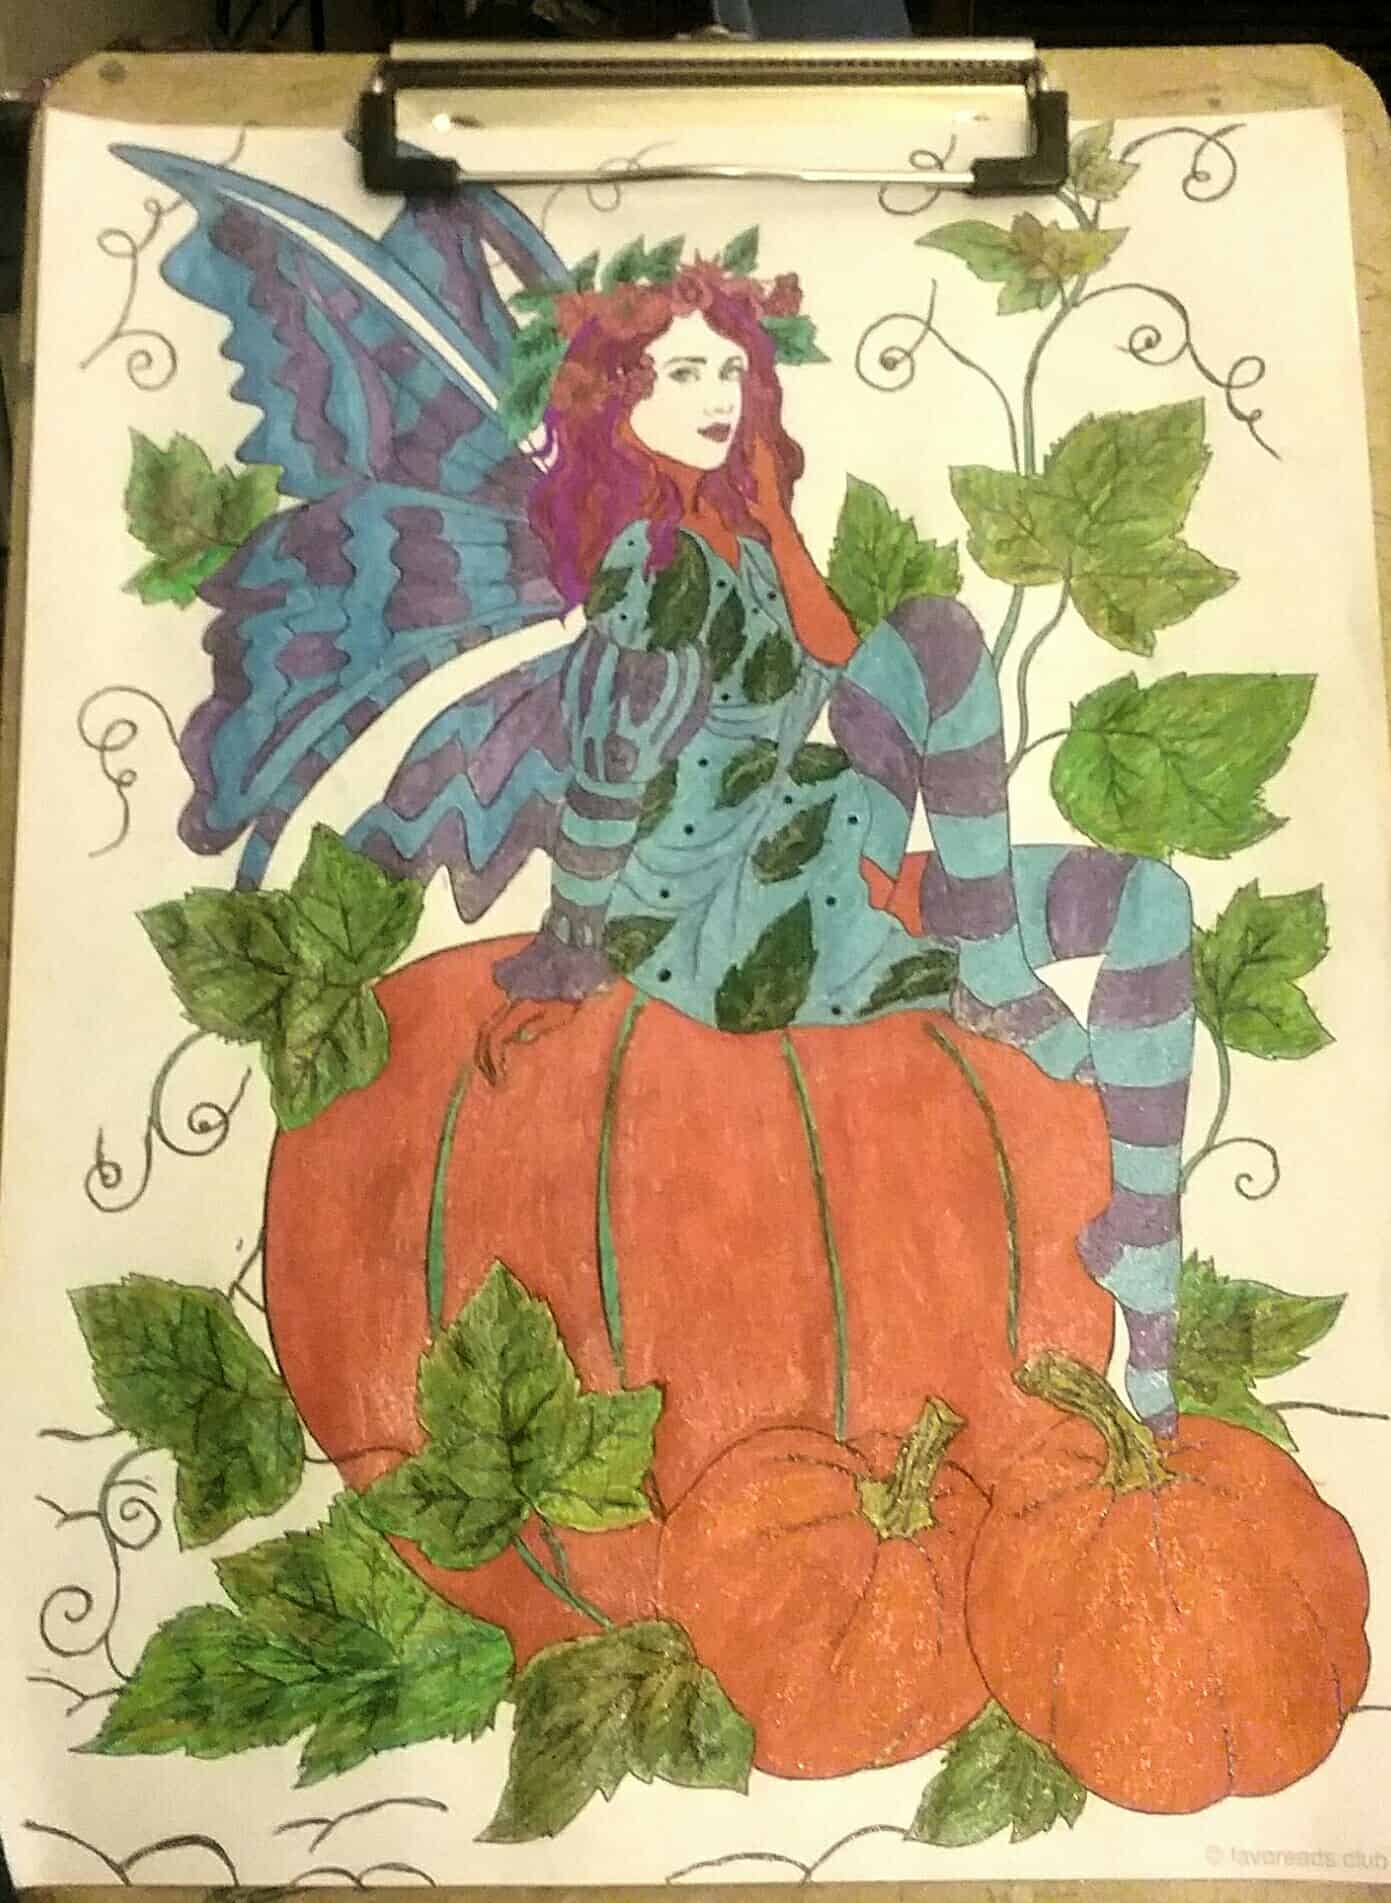 Fairy and Pumpkin